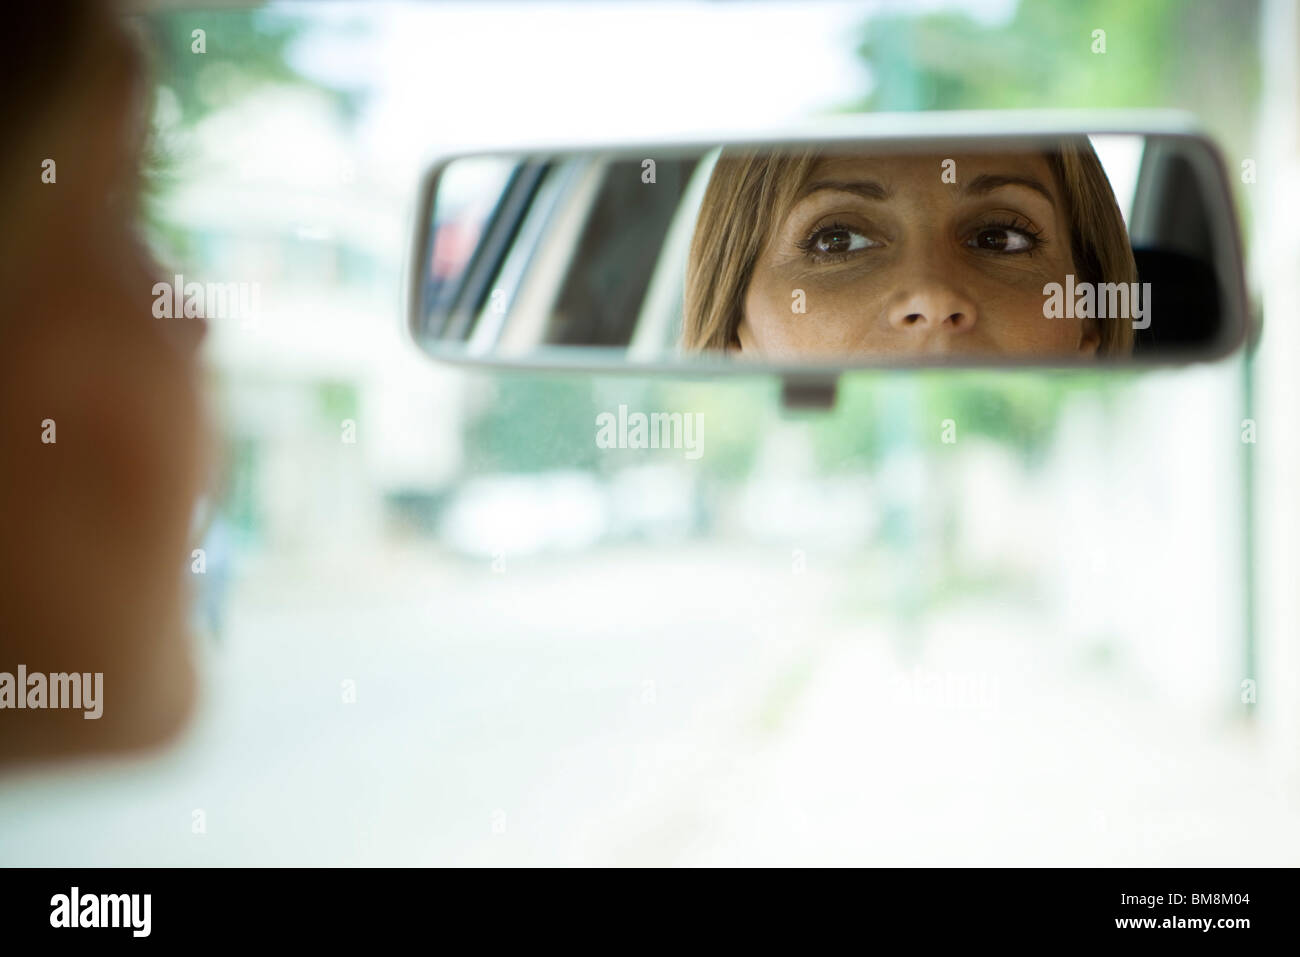 Driver checking rear view mirror Stock Photo